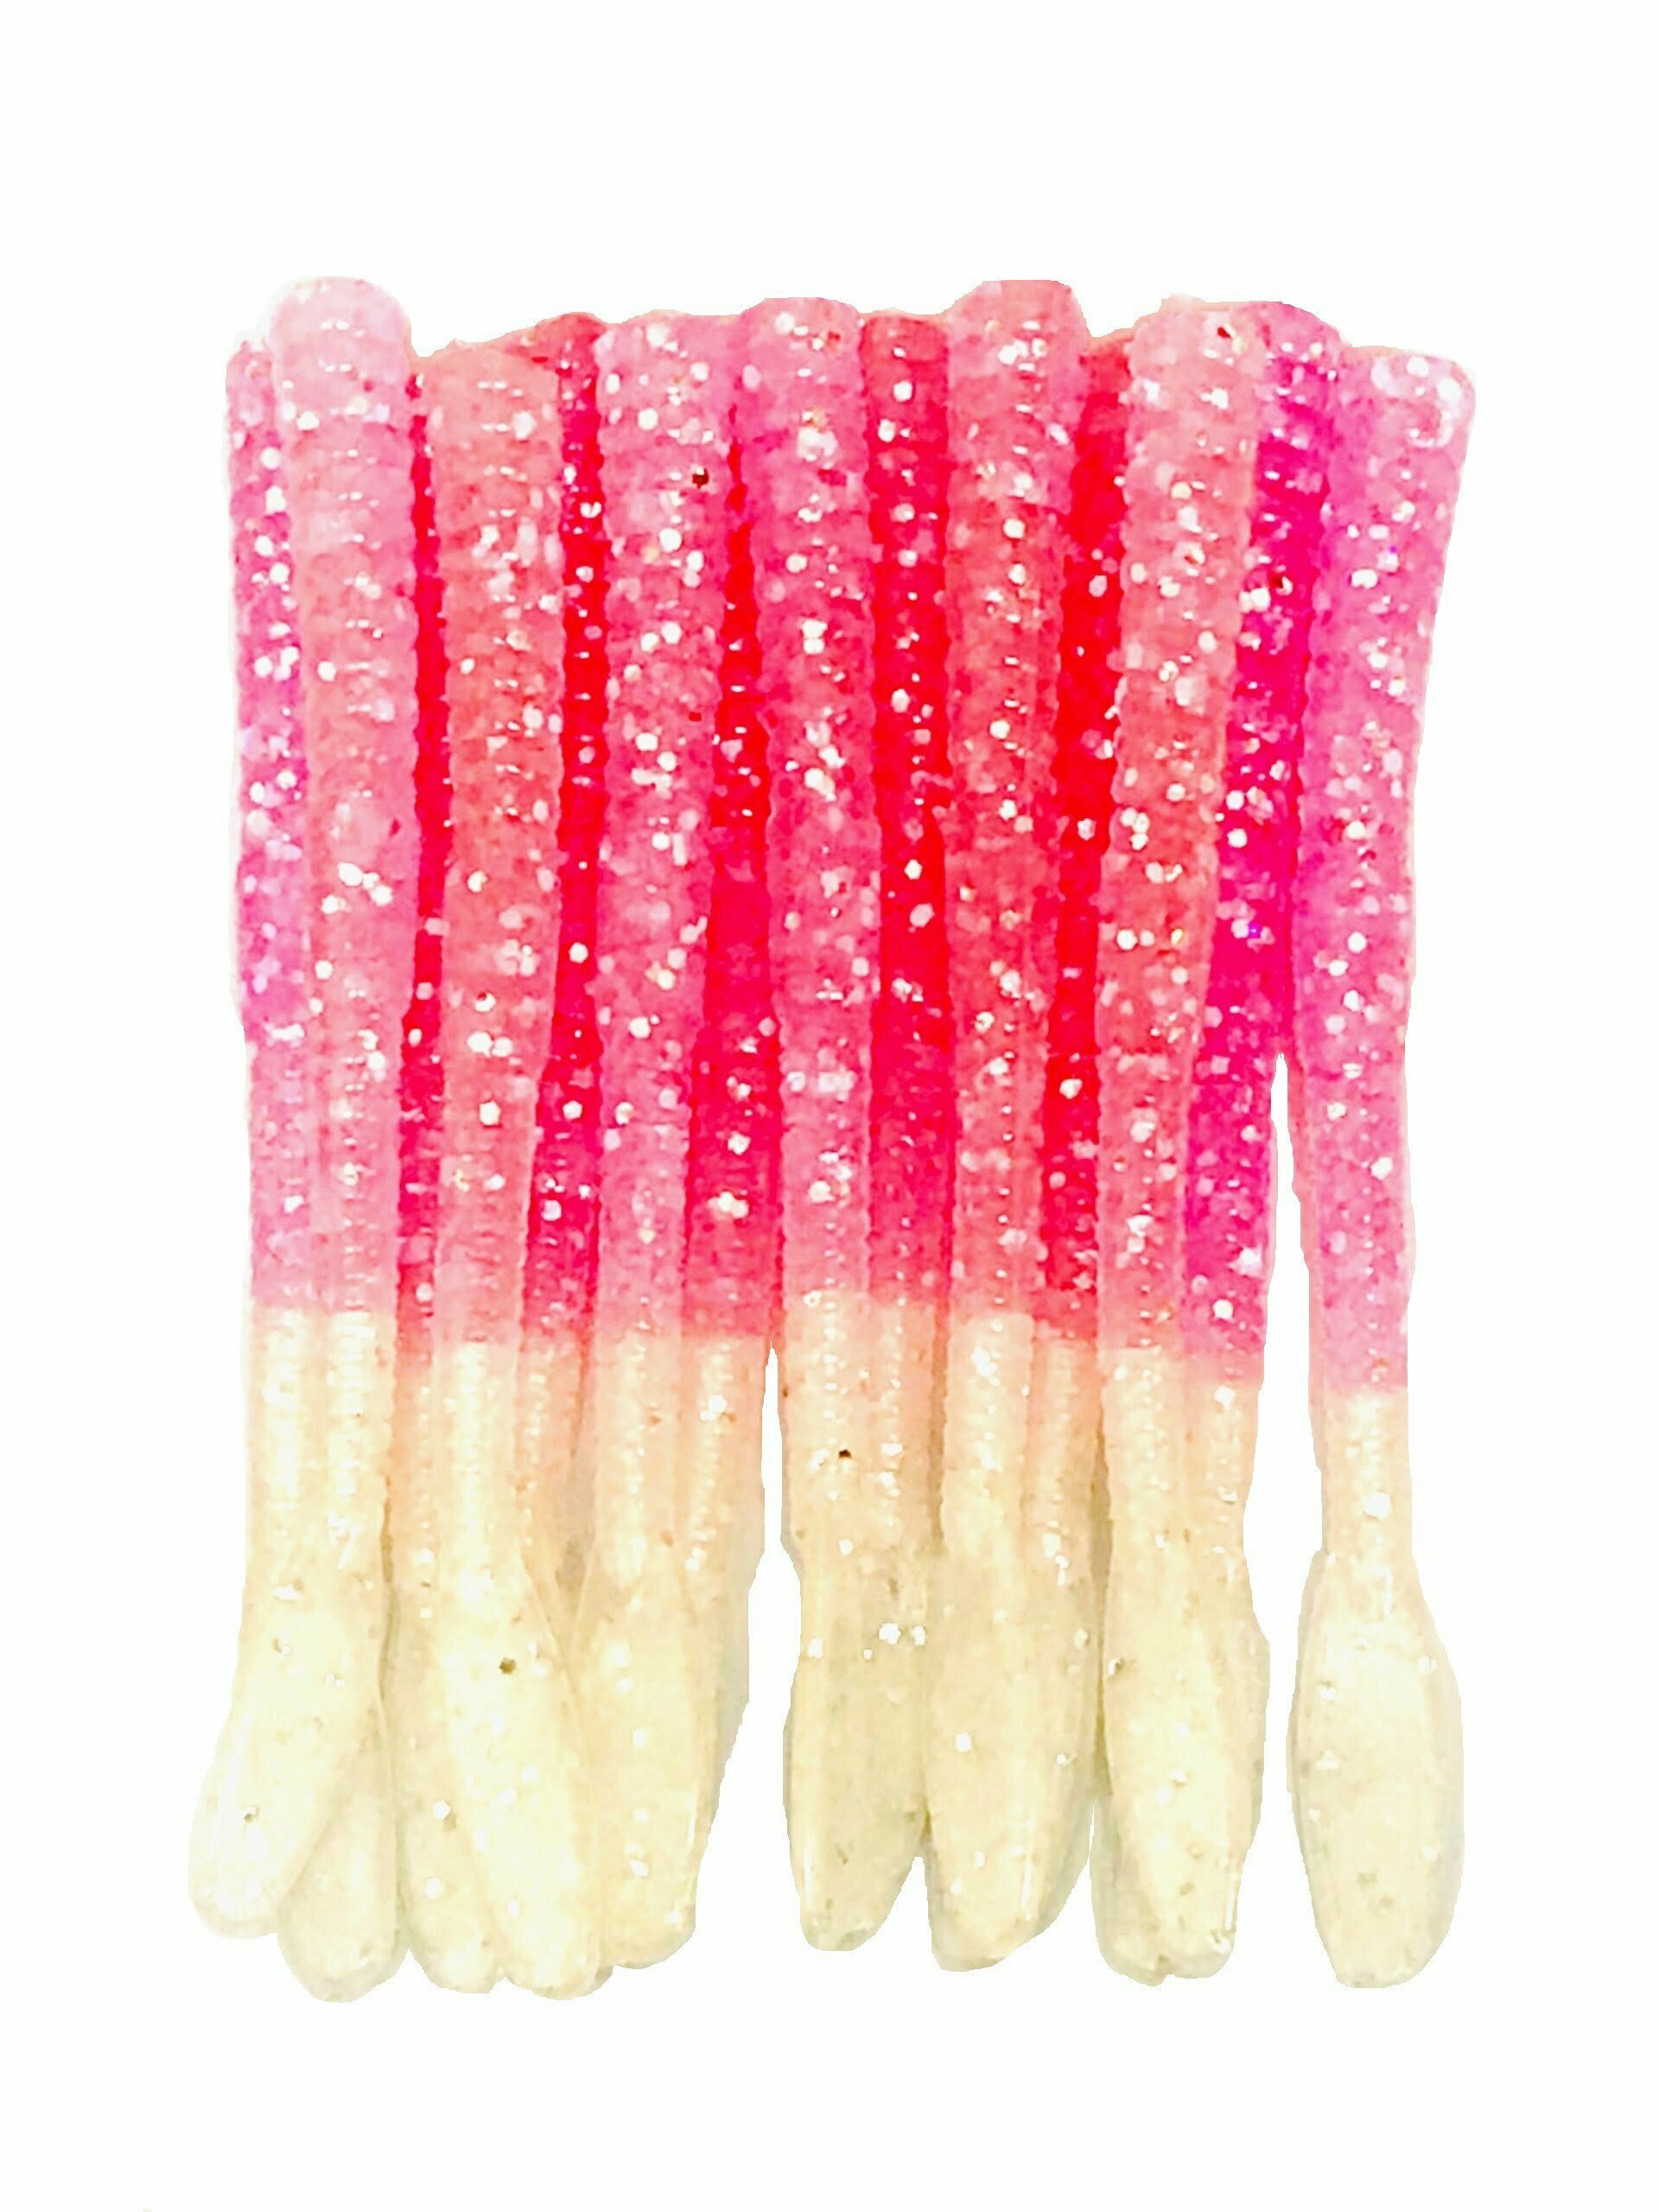 4 inch. INHALER Pink Pearl Oly Steelhead Worms – Horker Soft Baits